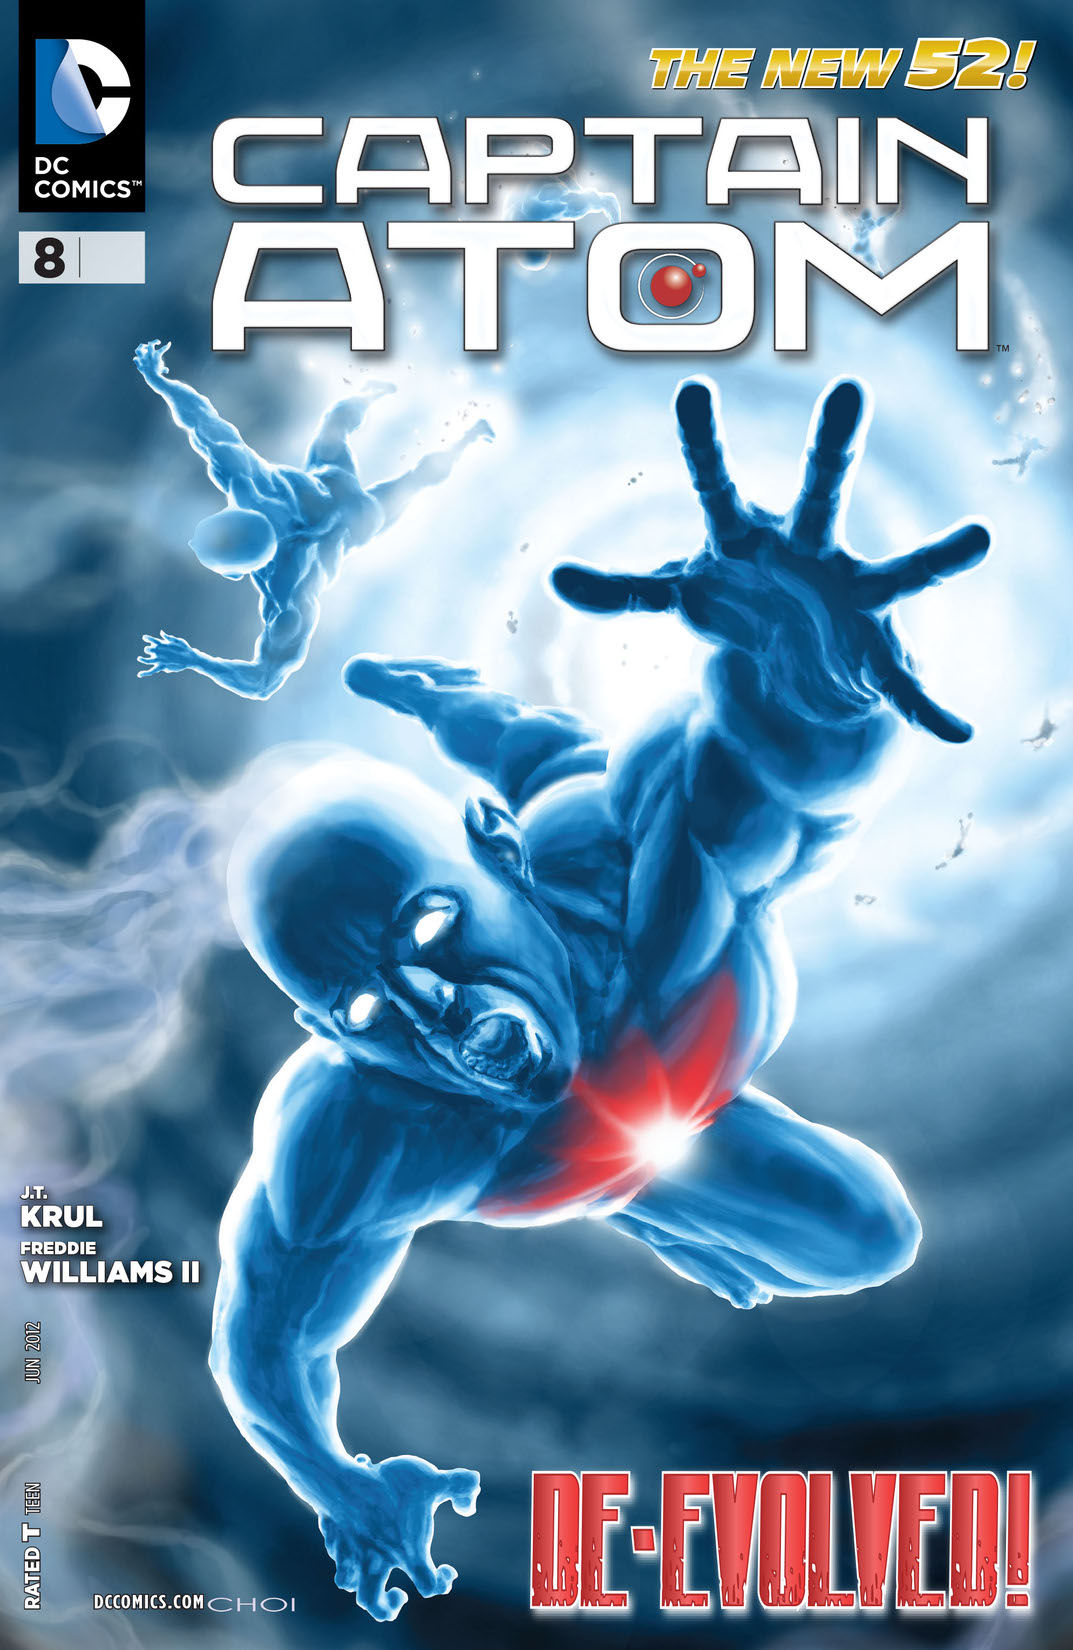 Captain Atom (2011-) #8 preview images